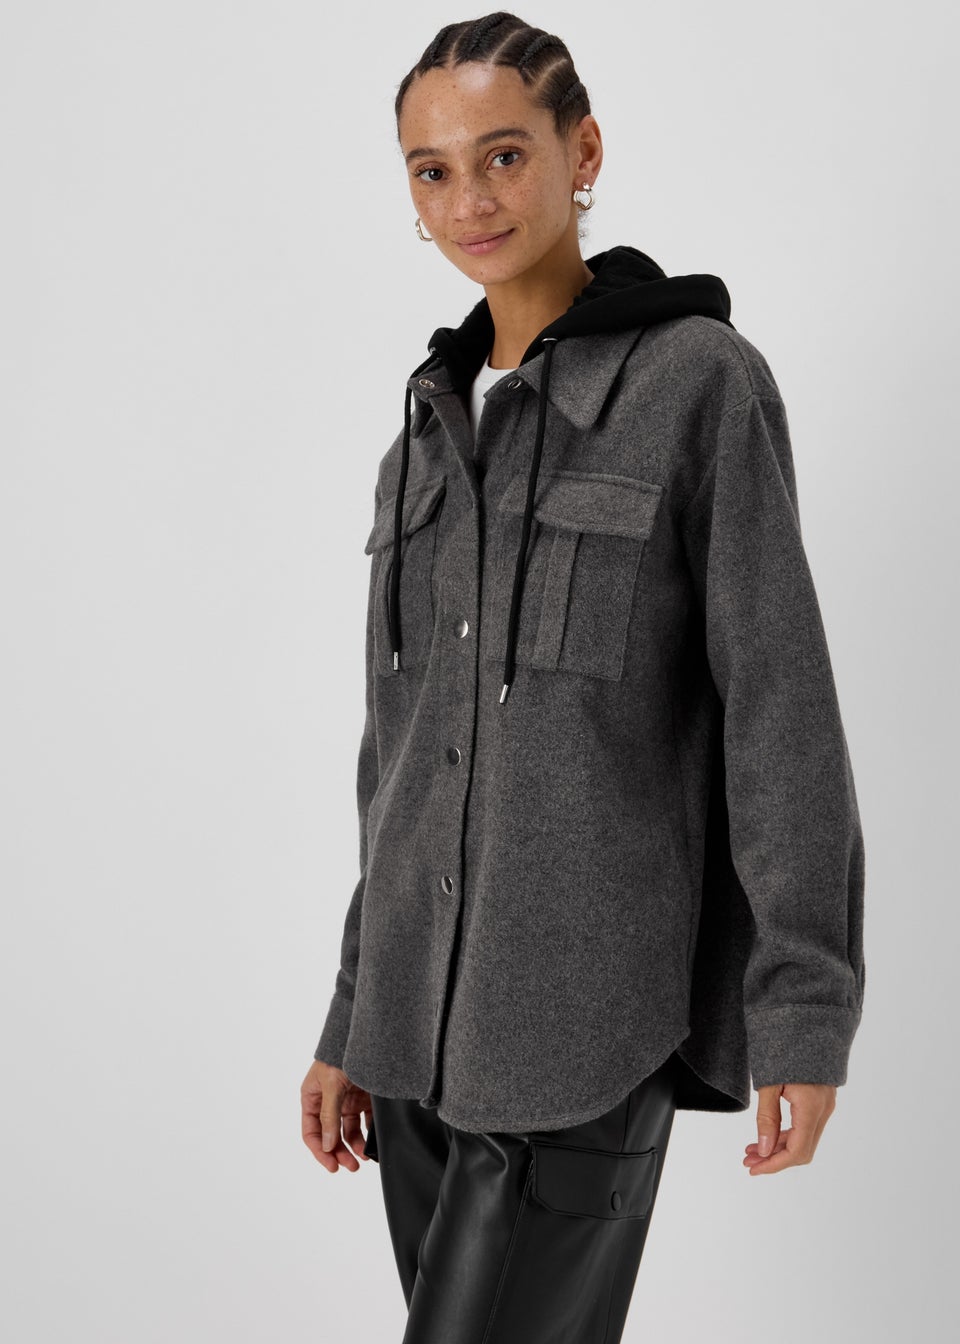 Grey Hooded Utility Jacket